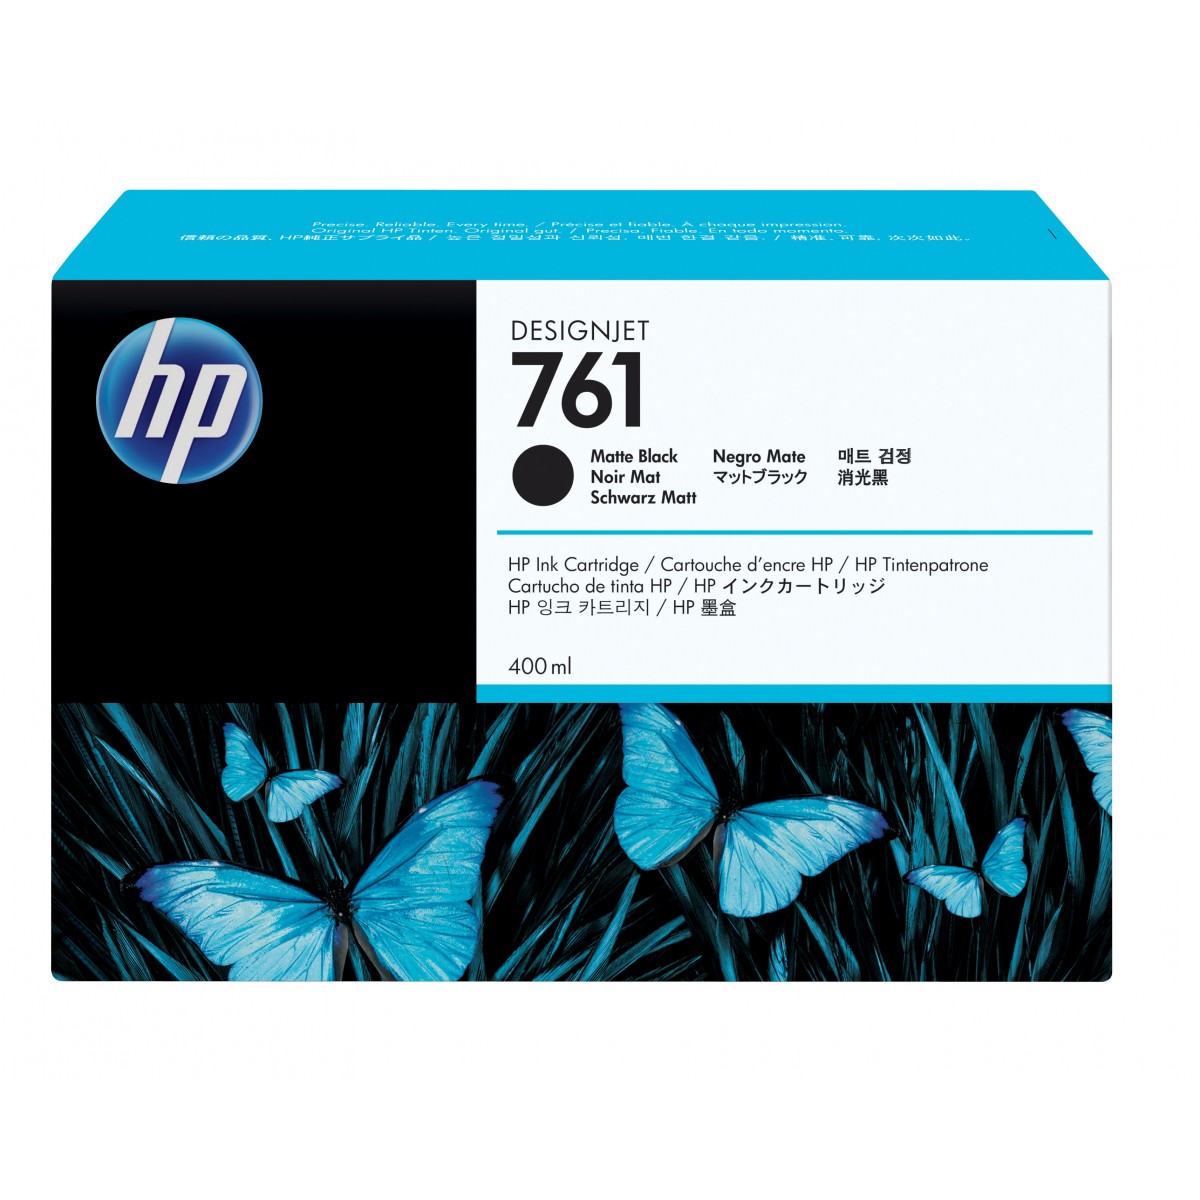 HP DesignJet 761 - Ink Cartridge Original - Black - 400 ml